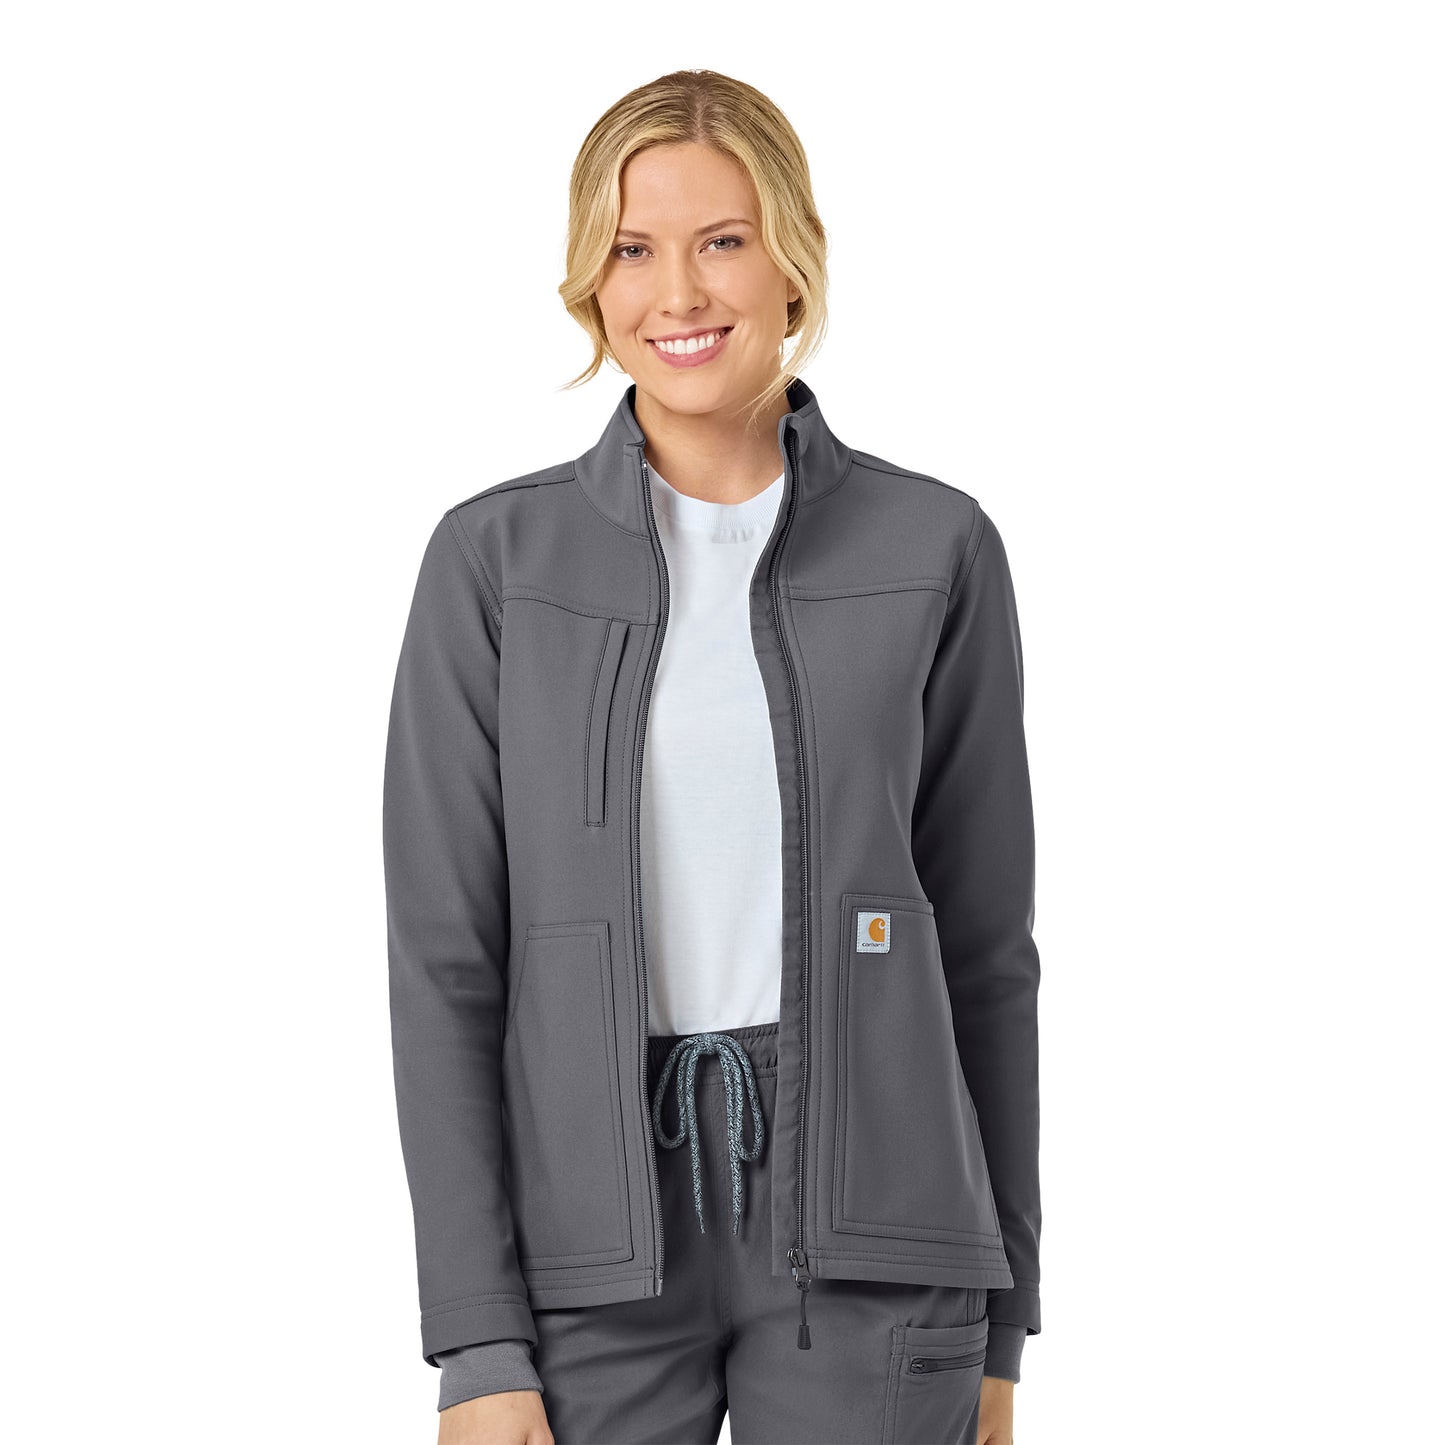 Carhartt C81023 Women's Rugged Flex Fleece Jacket - Pewter Grey